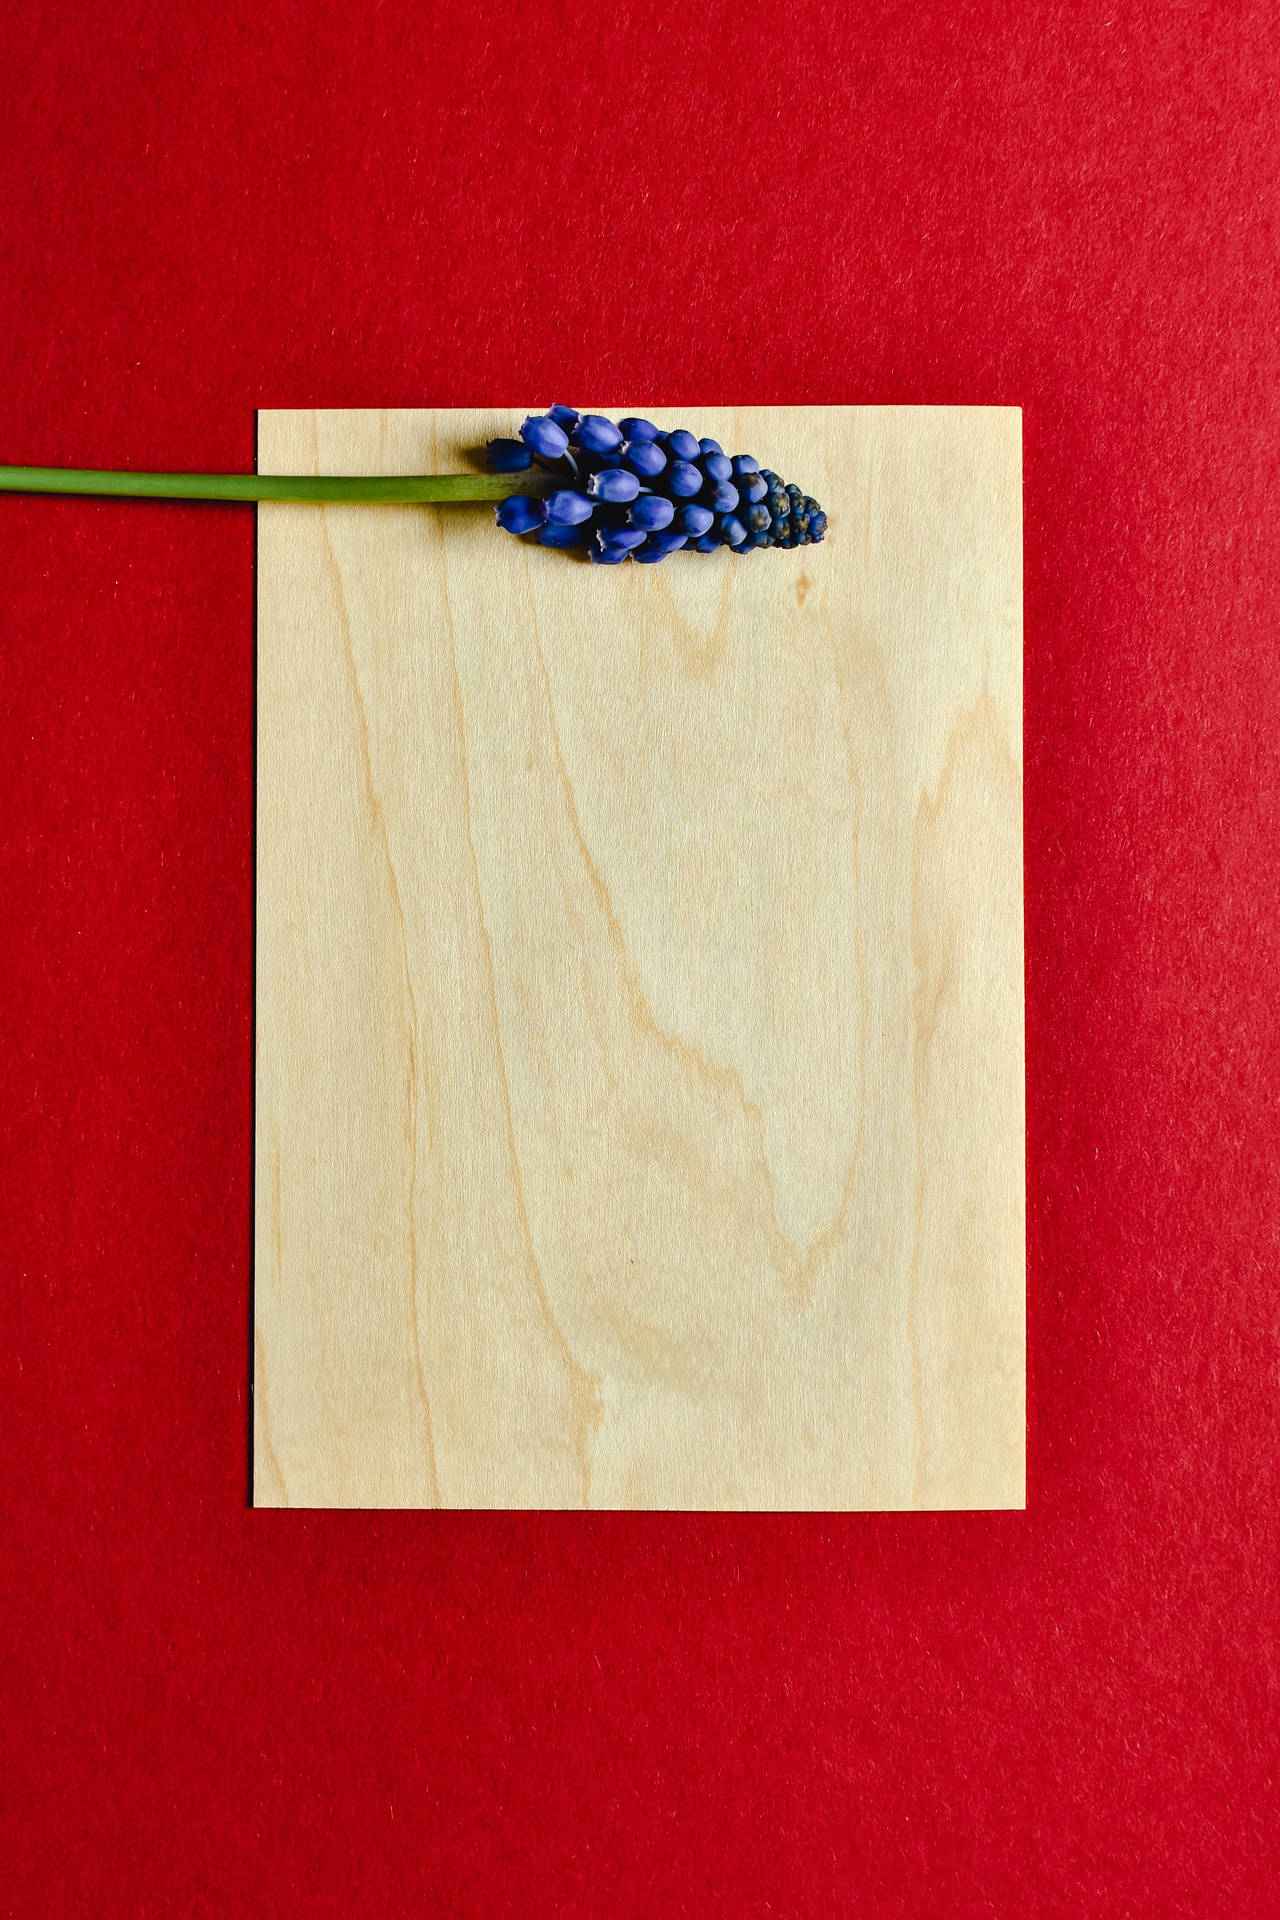 Hyacinth Flower Wooden Board Background